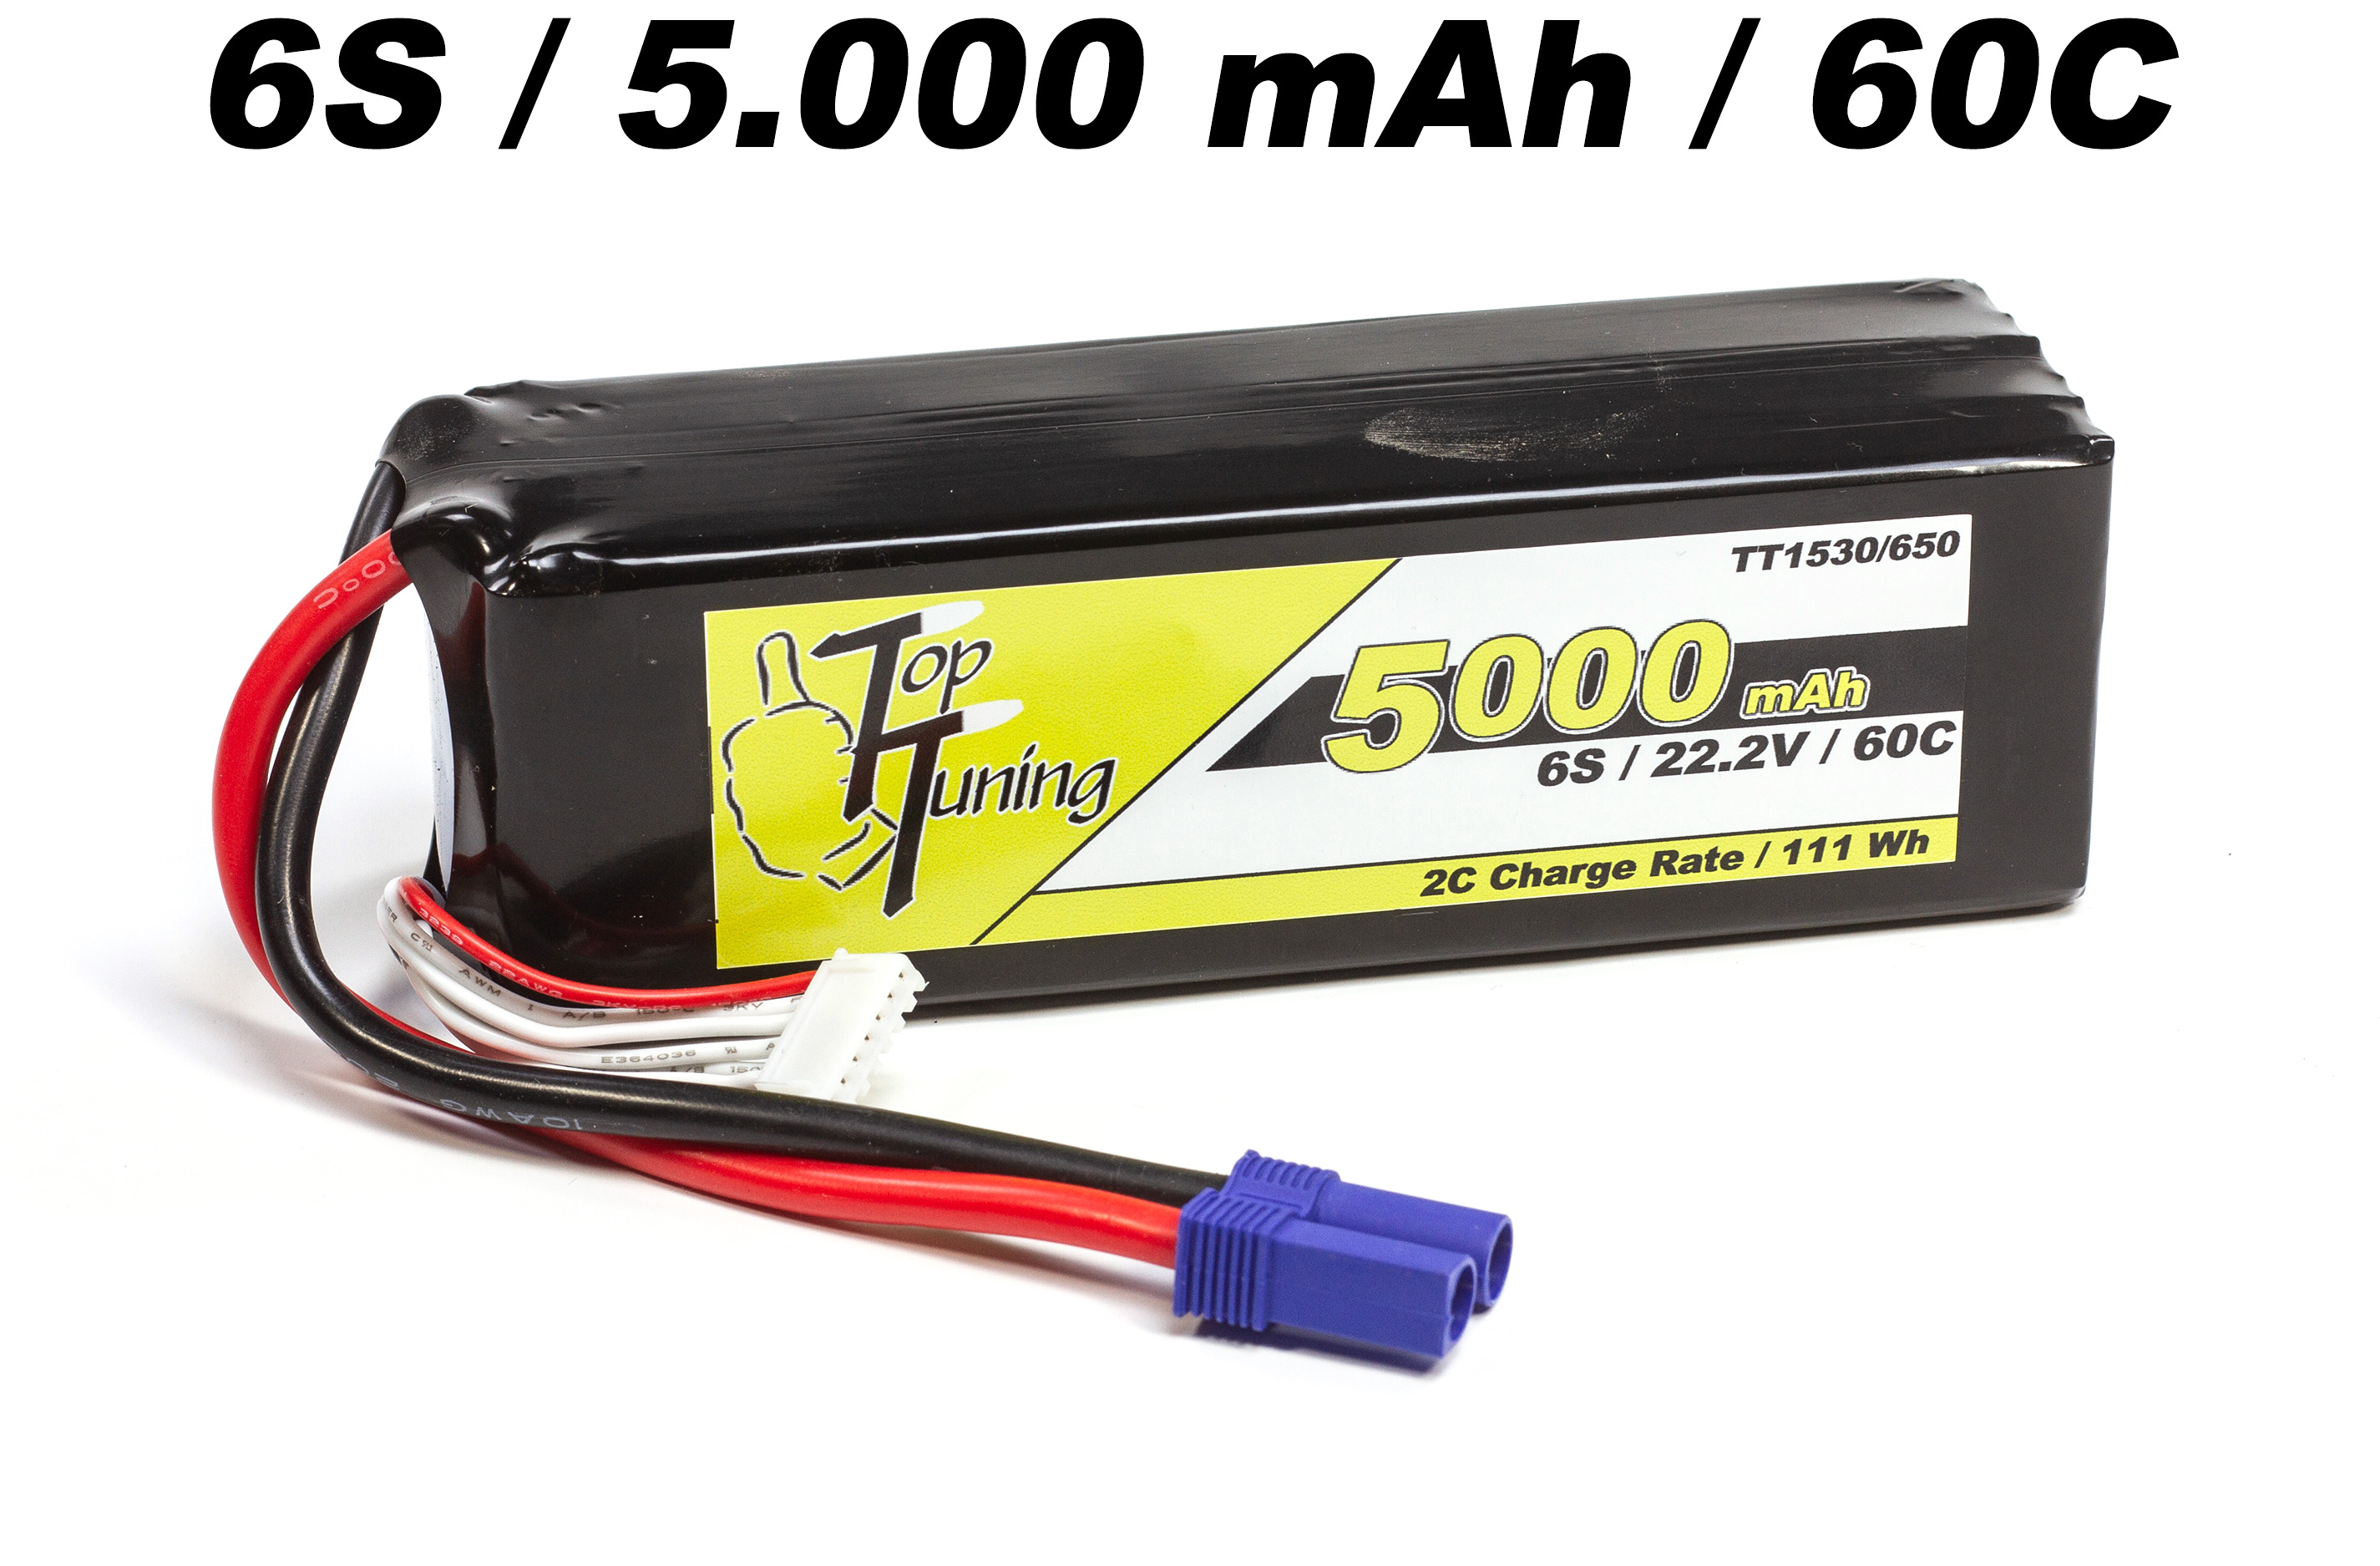 TT1530/650 Top Tuning 5000 mAh LiPo battery 6S, 22.2V 60C Offer